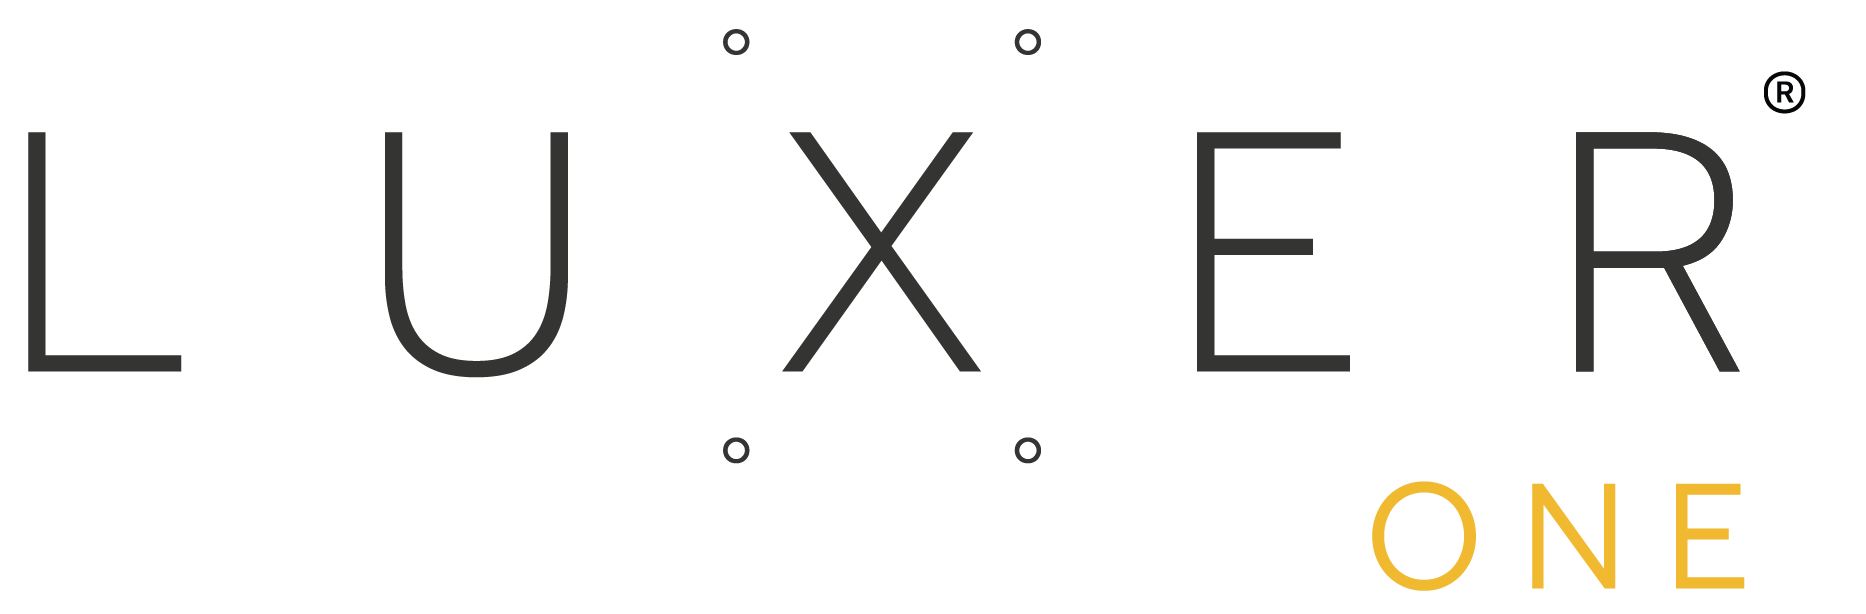 Luxer One logo